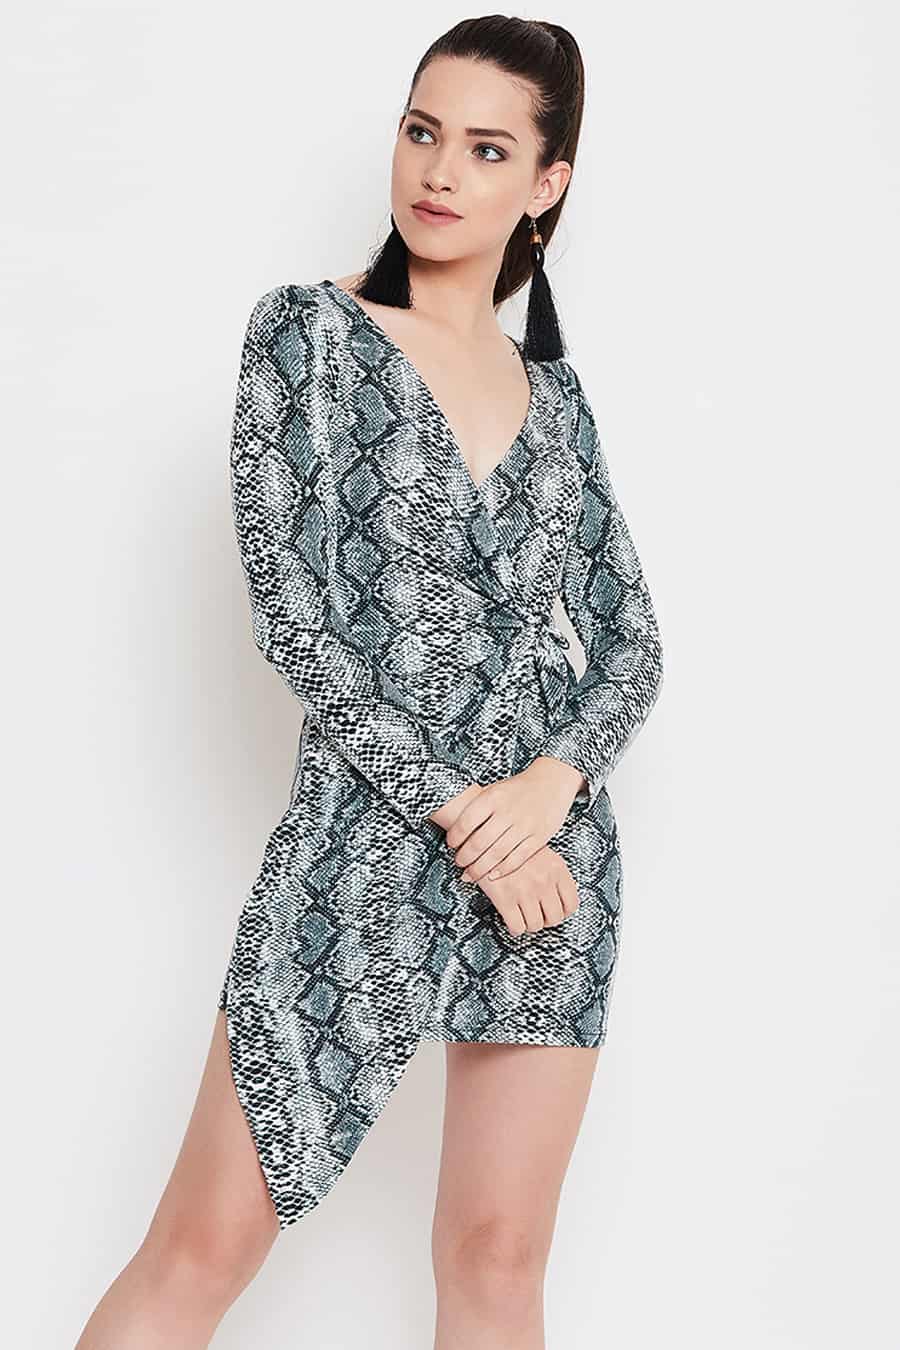 Grey snake print dress